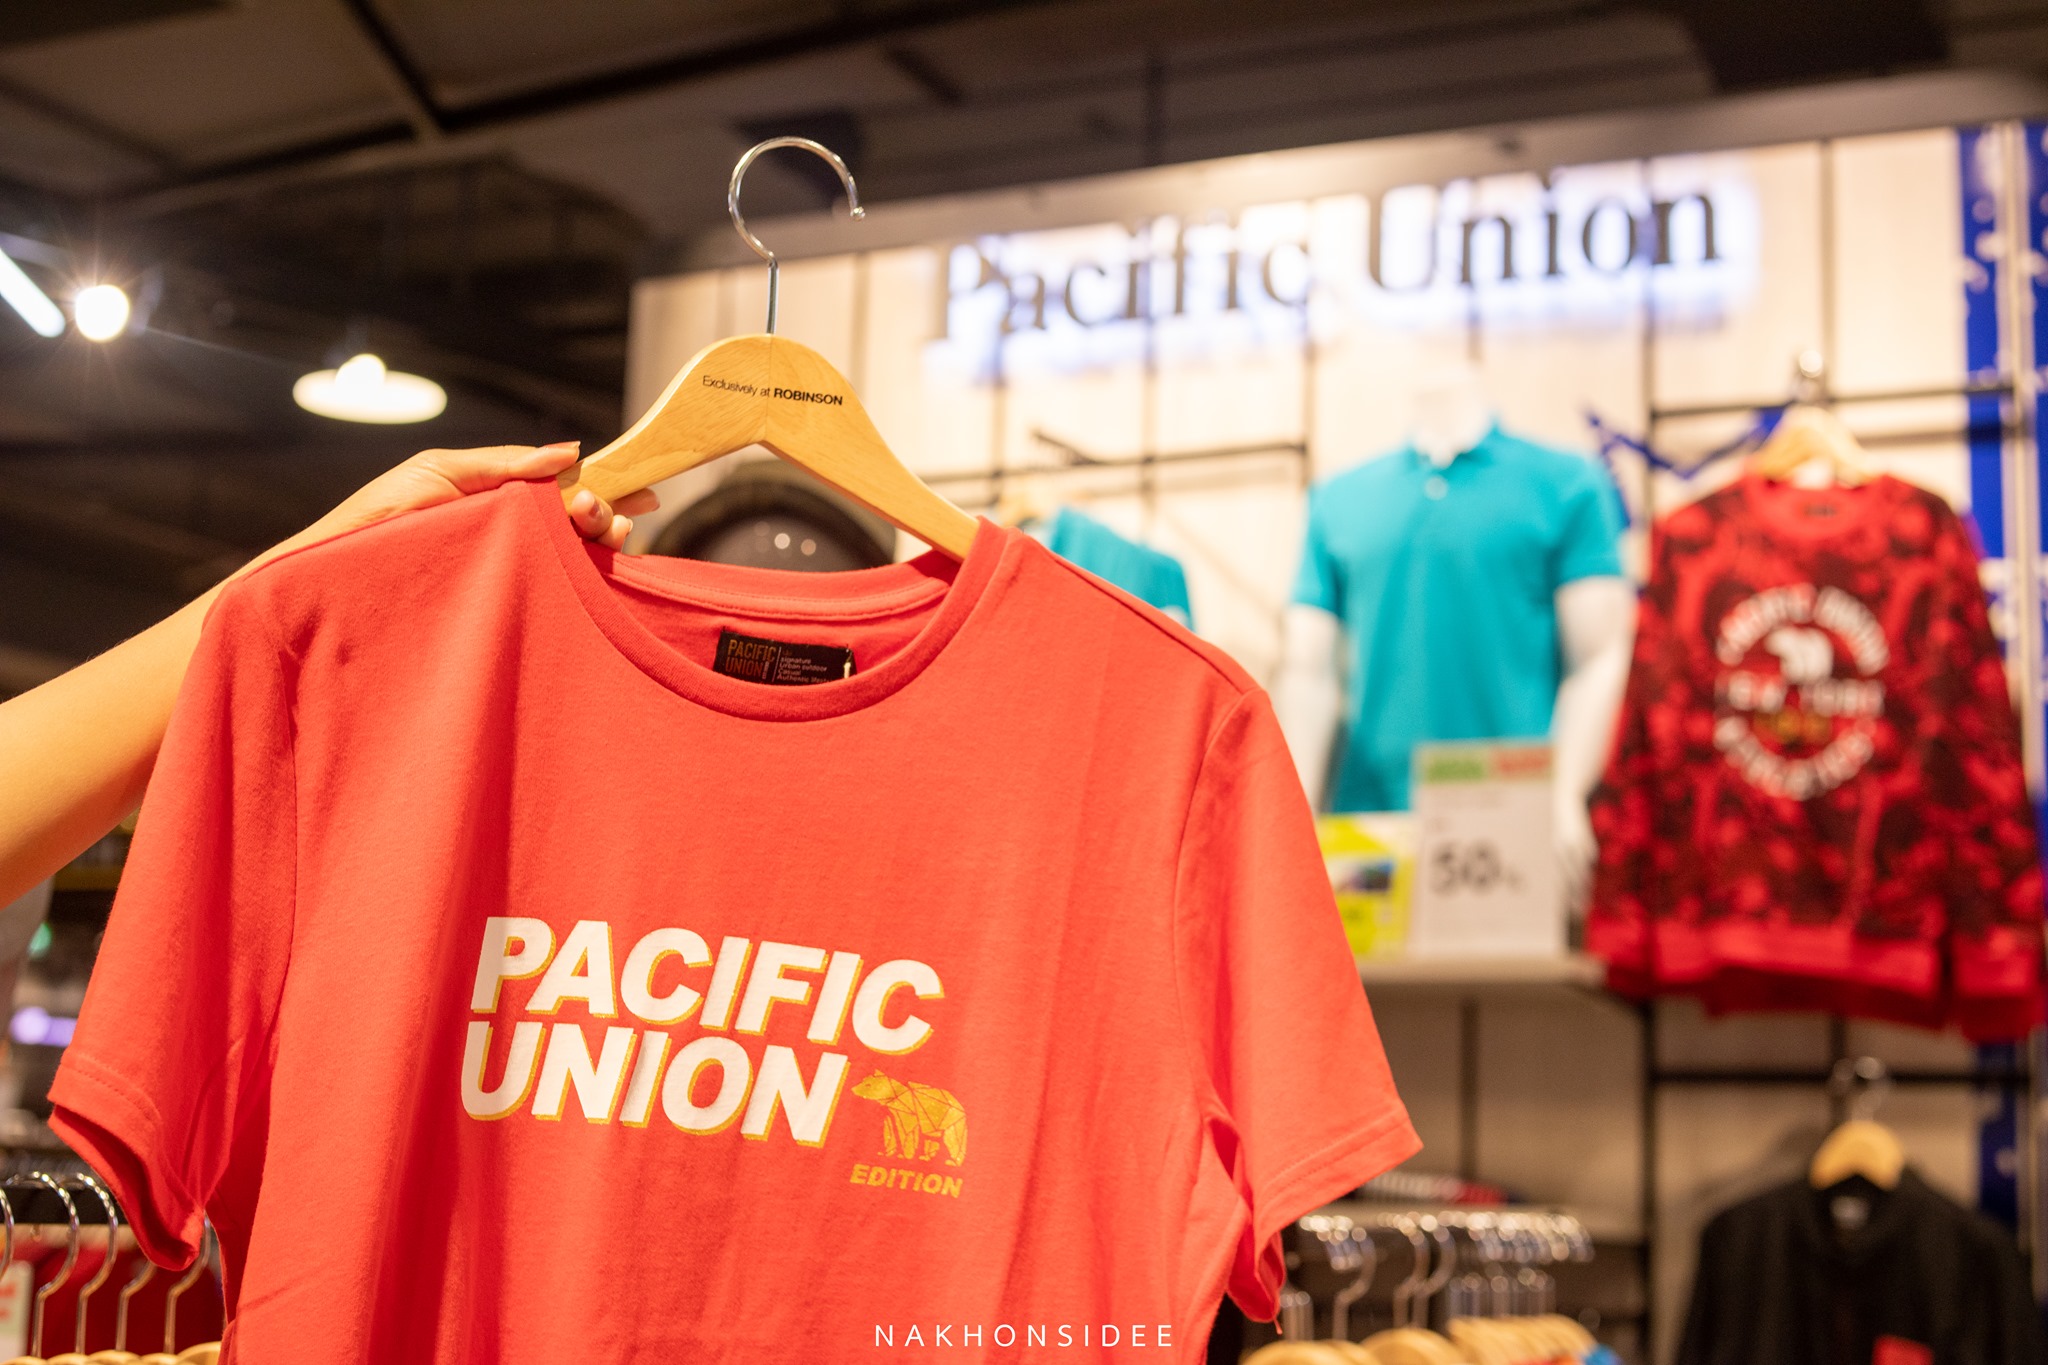  Pacific-Union
เสื้อยืดสกรีนลายน่ารัก-มีให้เลือกหลากหลายรูปแบบ

ราคาปกติ-795-895-บาท-เหลือ-299-บาทเท่านั้น โรบินสัน,นครศรีธรรมราช